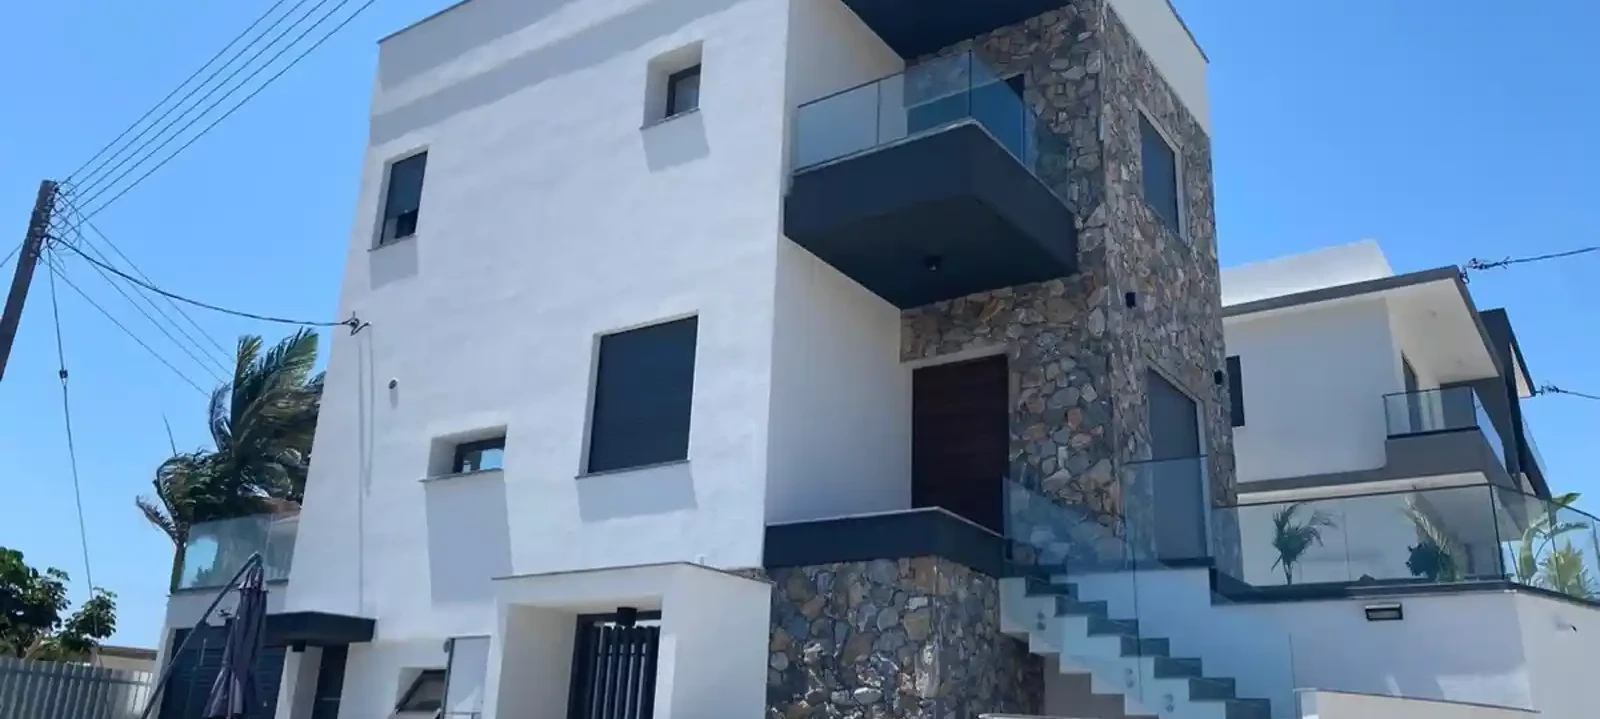 3-bedroom villa fоr sаle €650.000, image 1